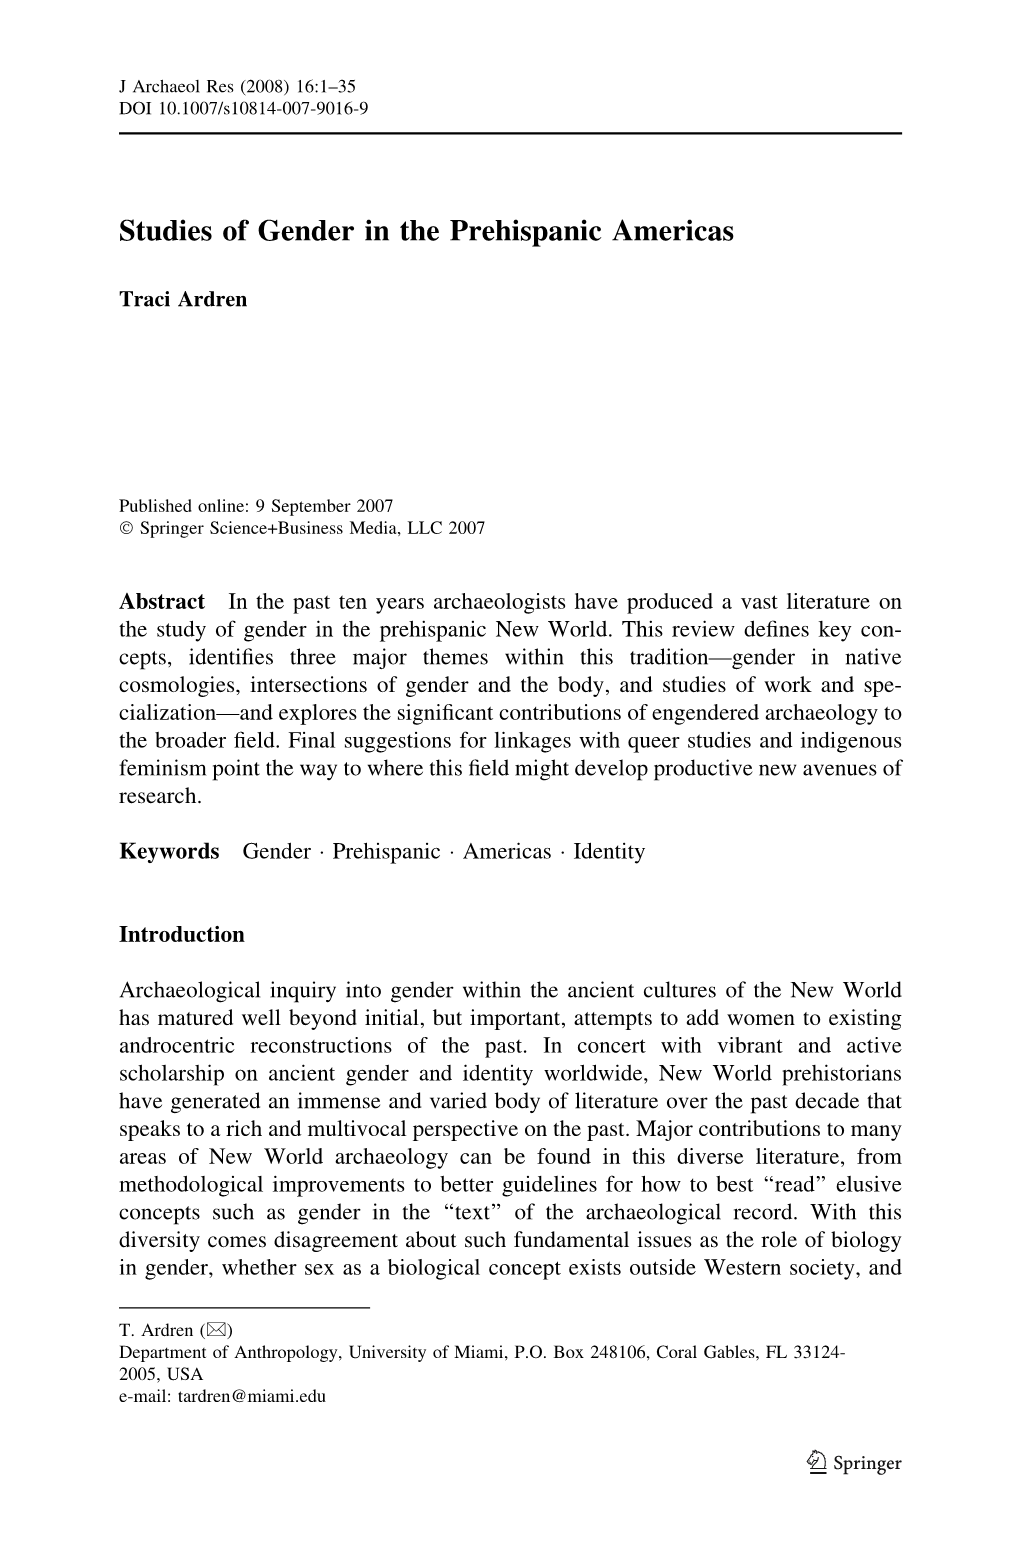 Gender Studies in Prehispanic Archaeology